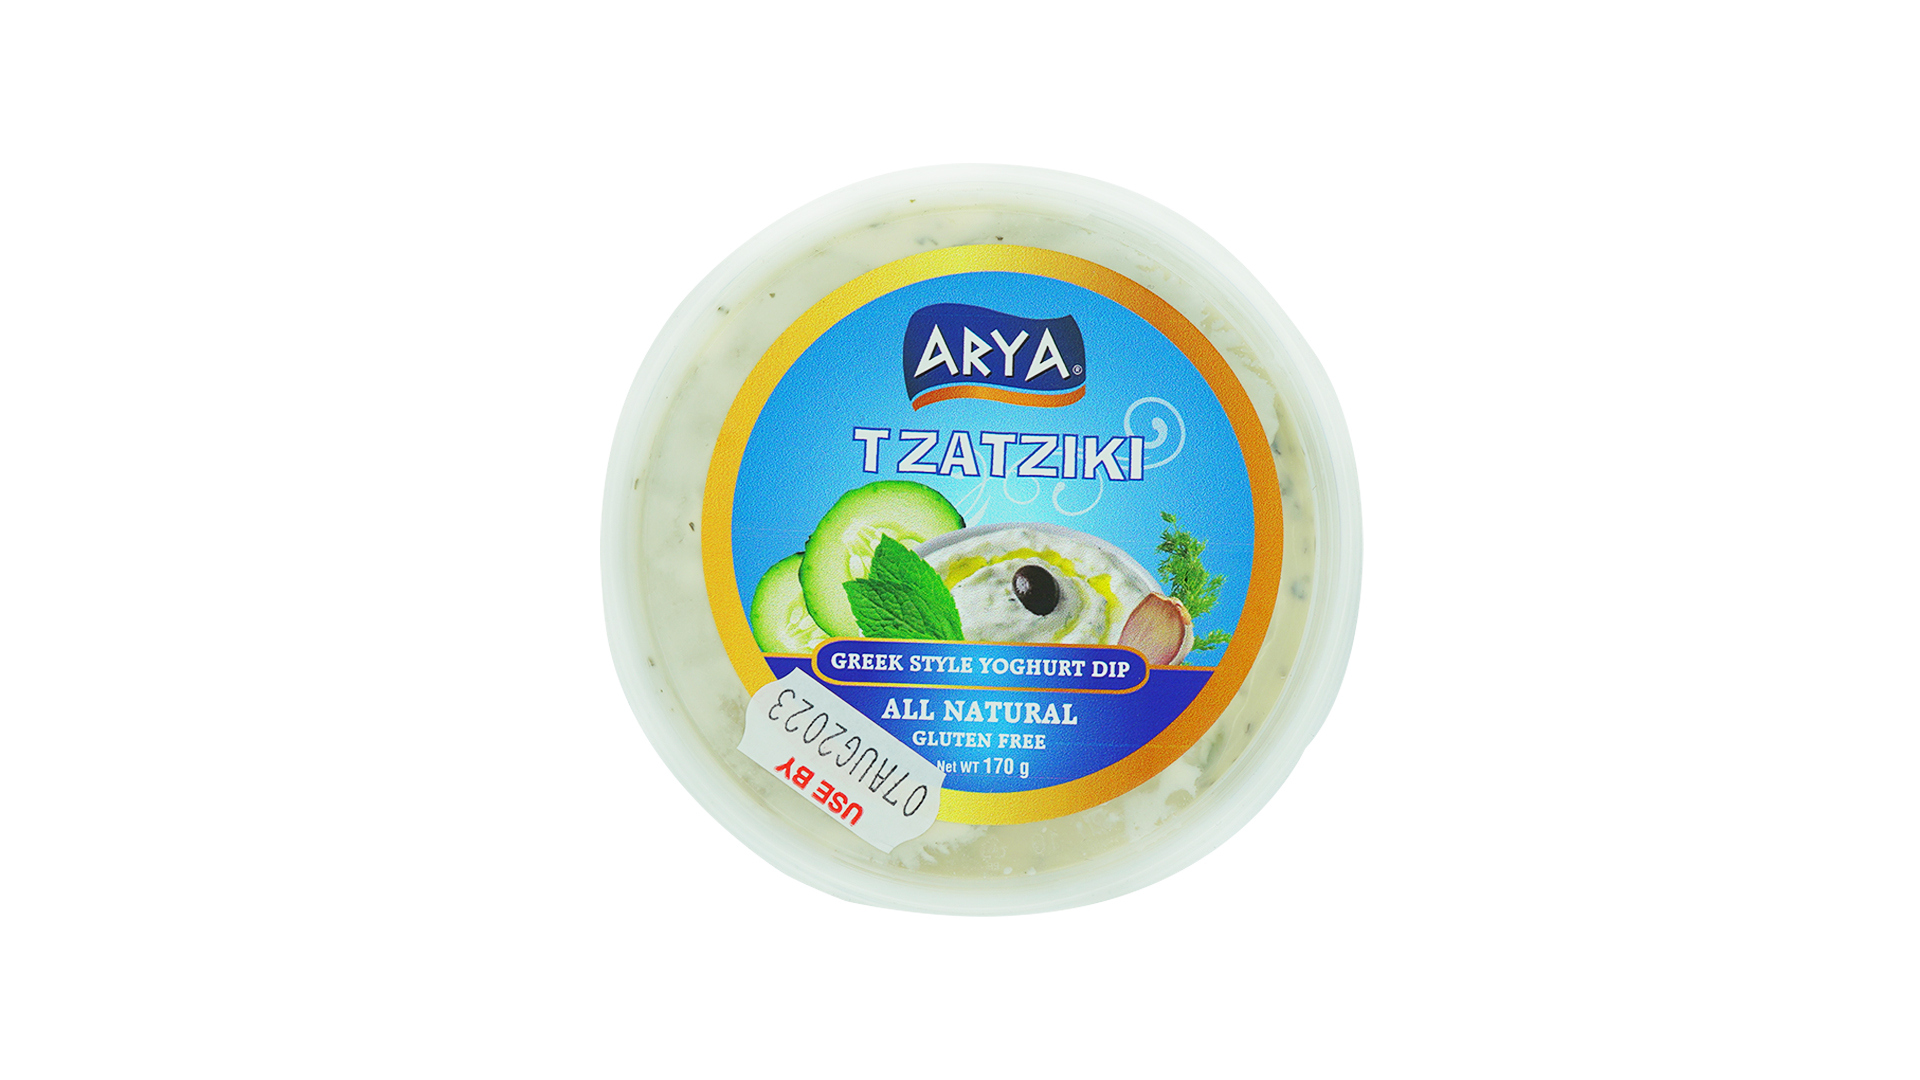 Arya tzatziki greek style yoghurt dip 170g 1